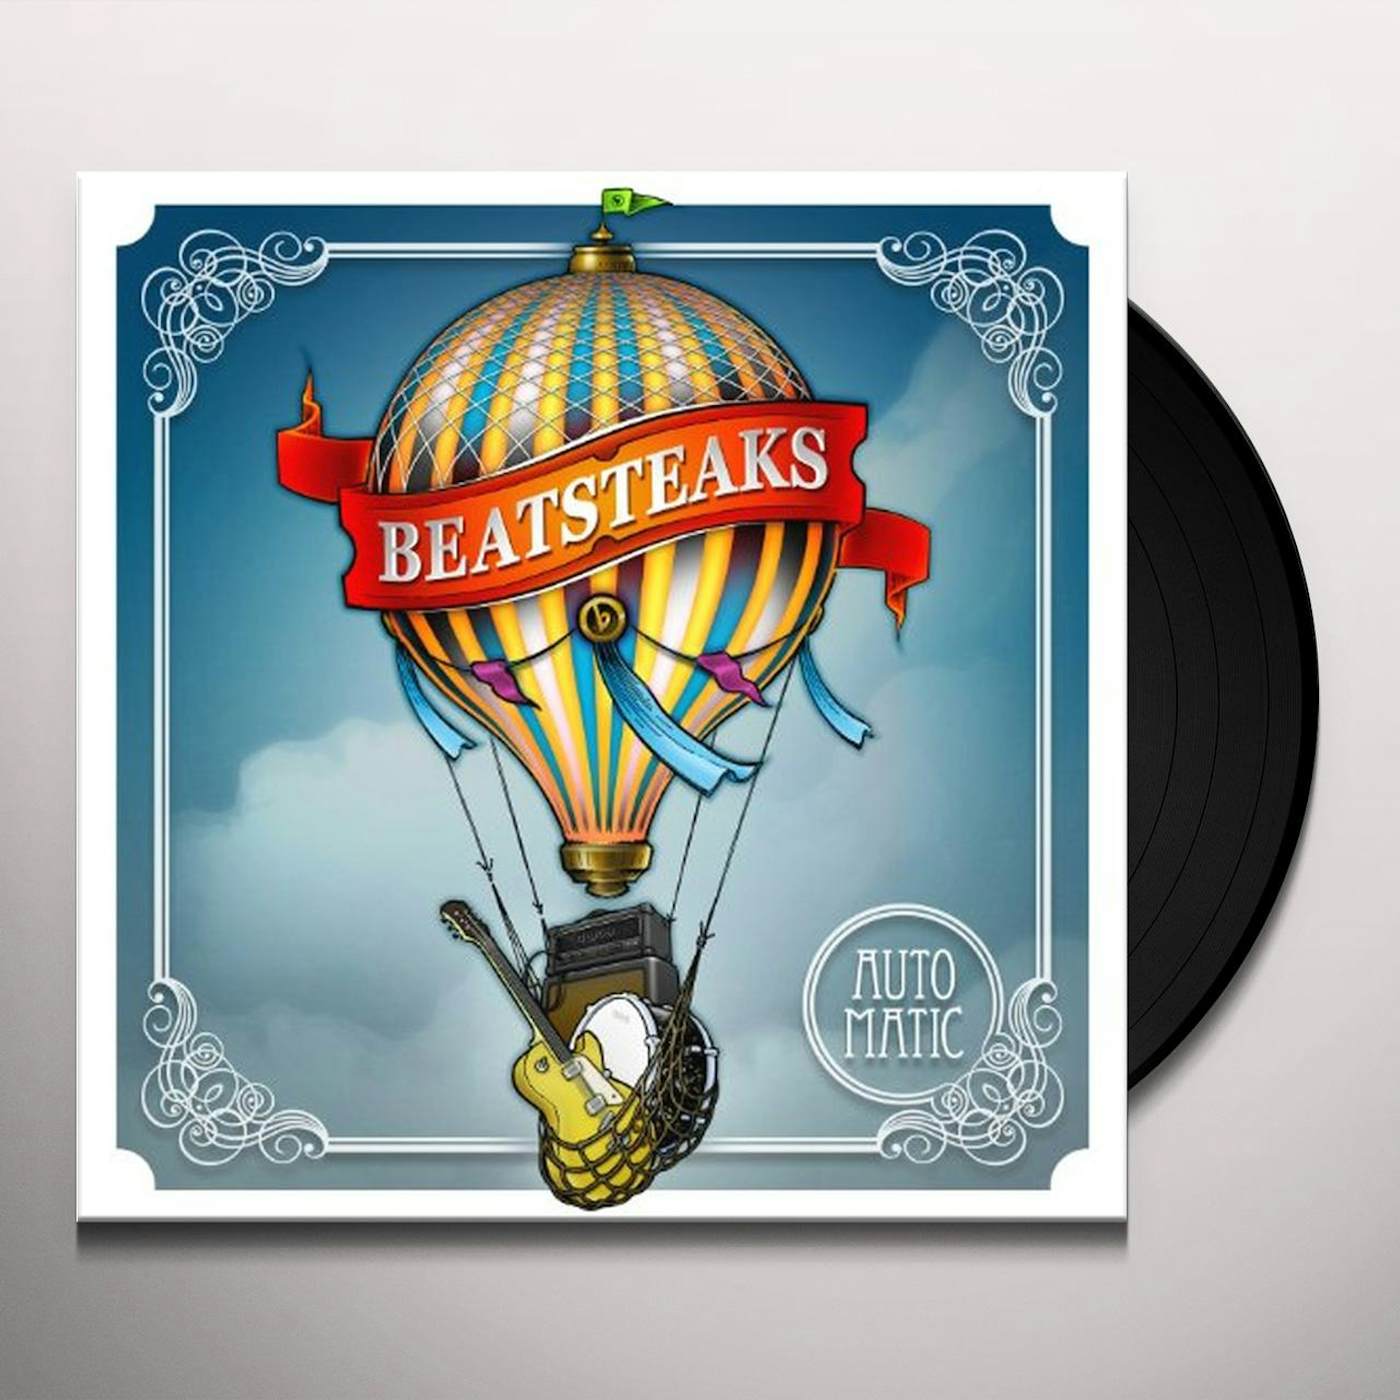 Beatsteaks Automatic Vinyl Record